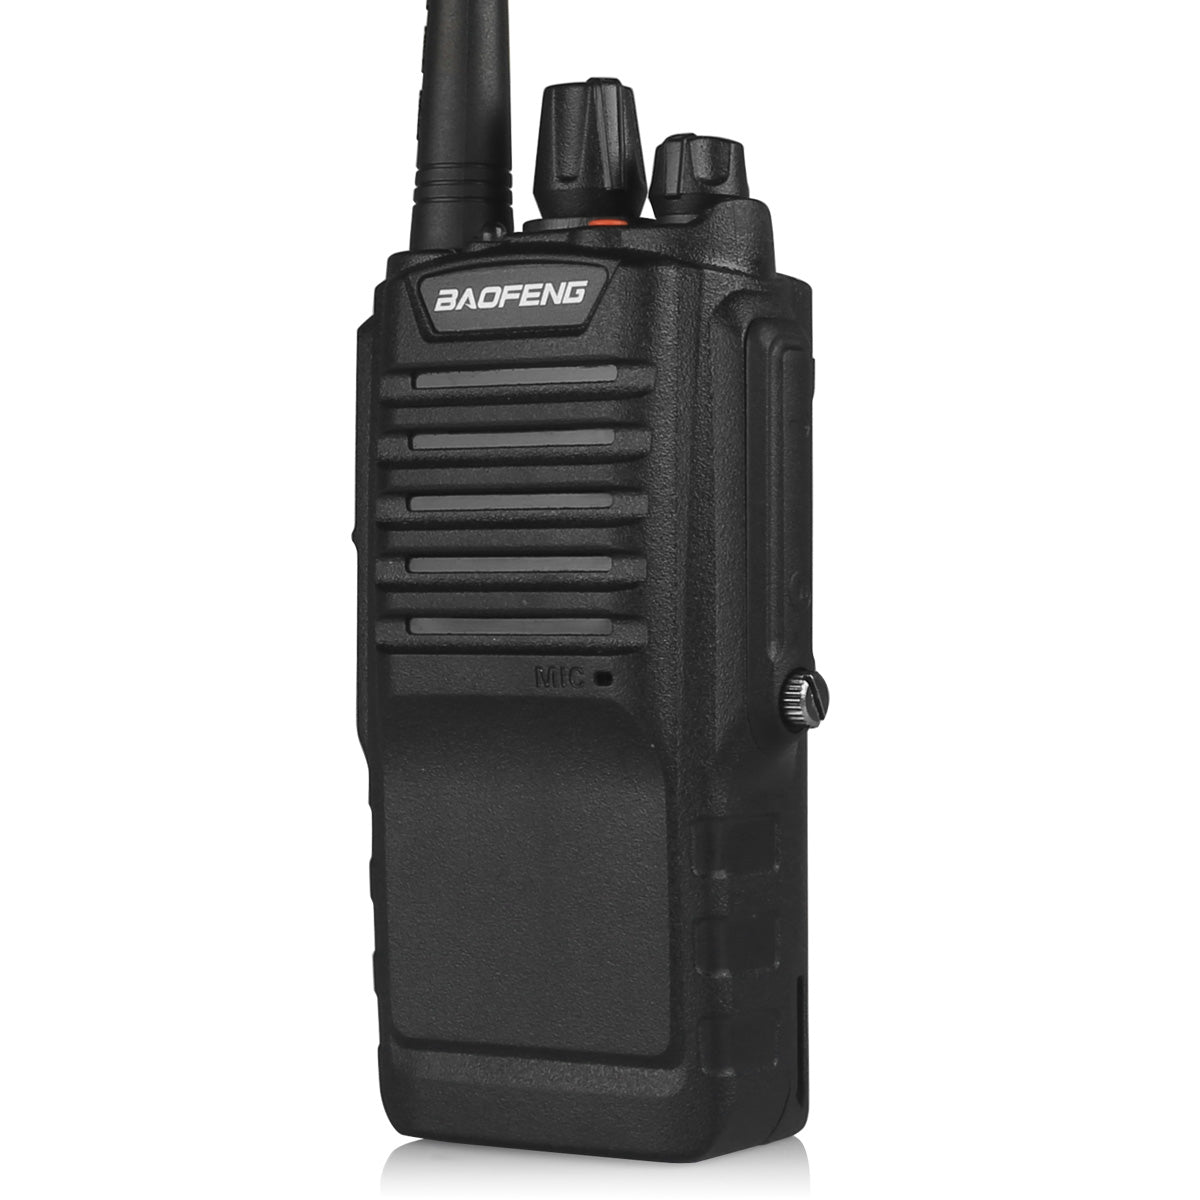 Baofeng BF-9700 UHF Waterproof Walkie Talkie Handheld Two Way Radio -  Two-Way Radio